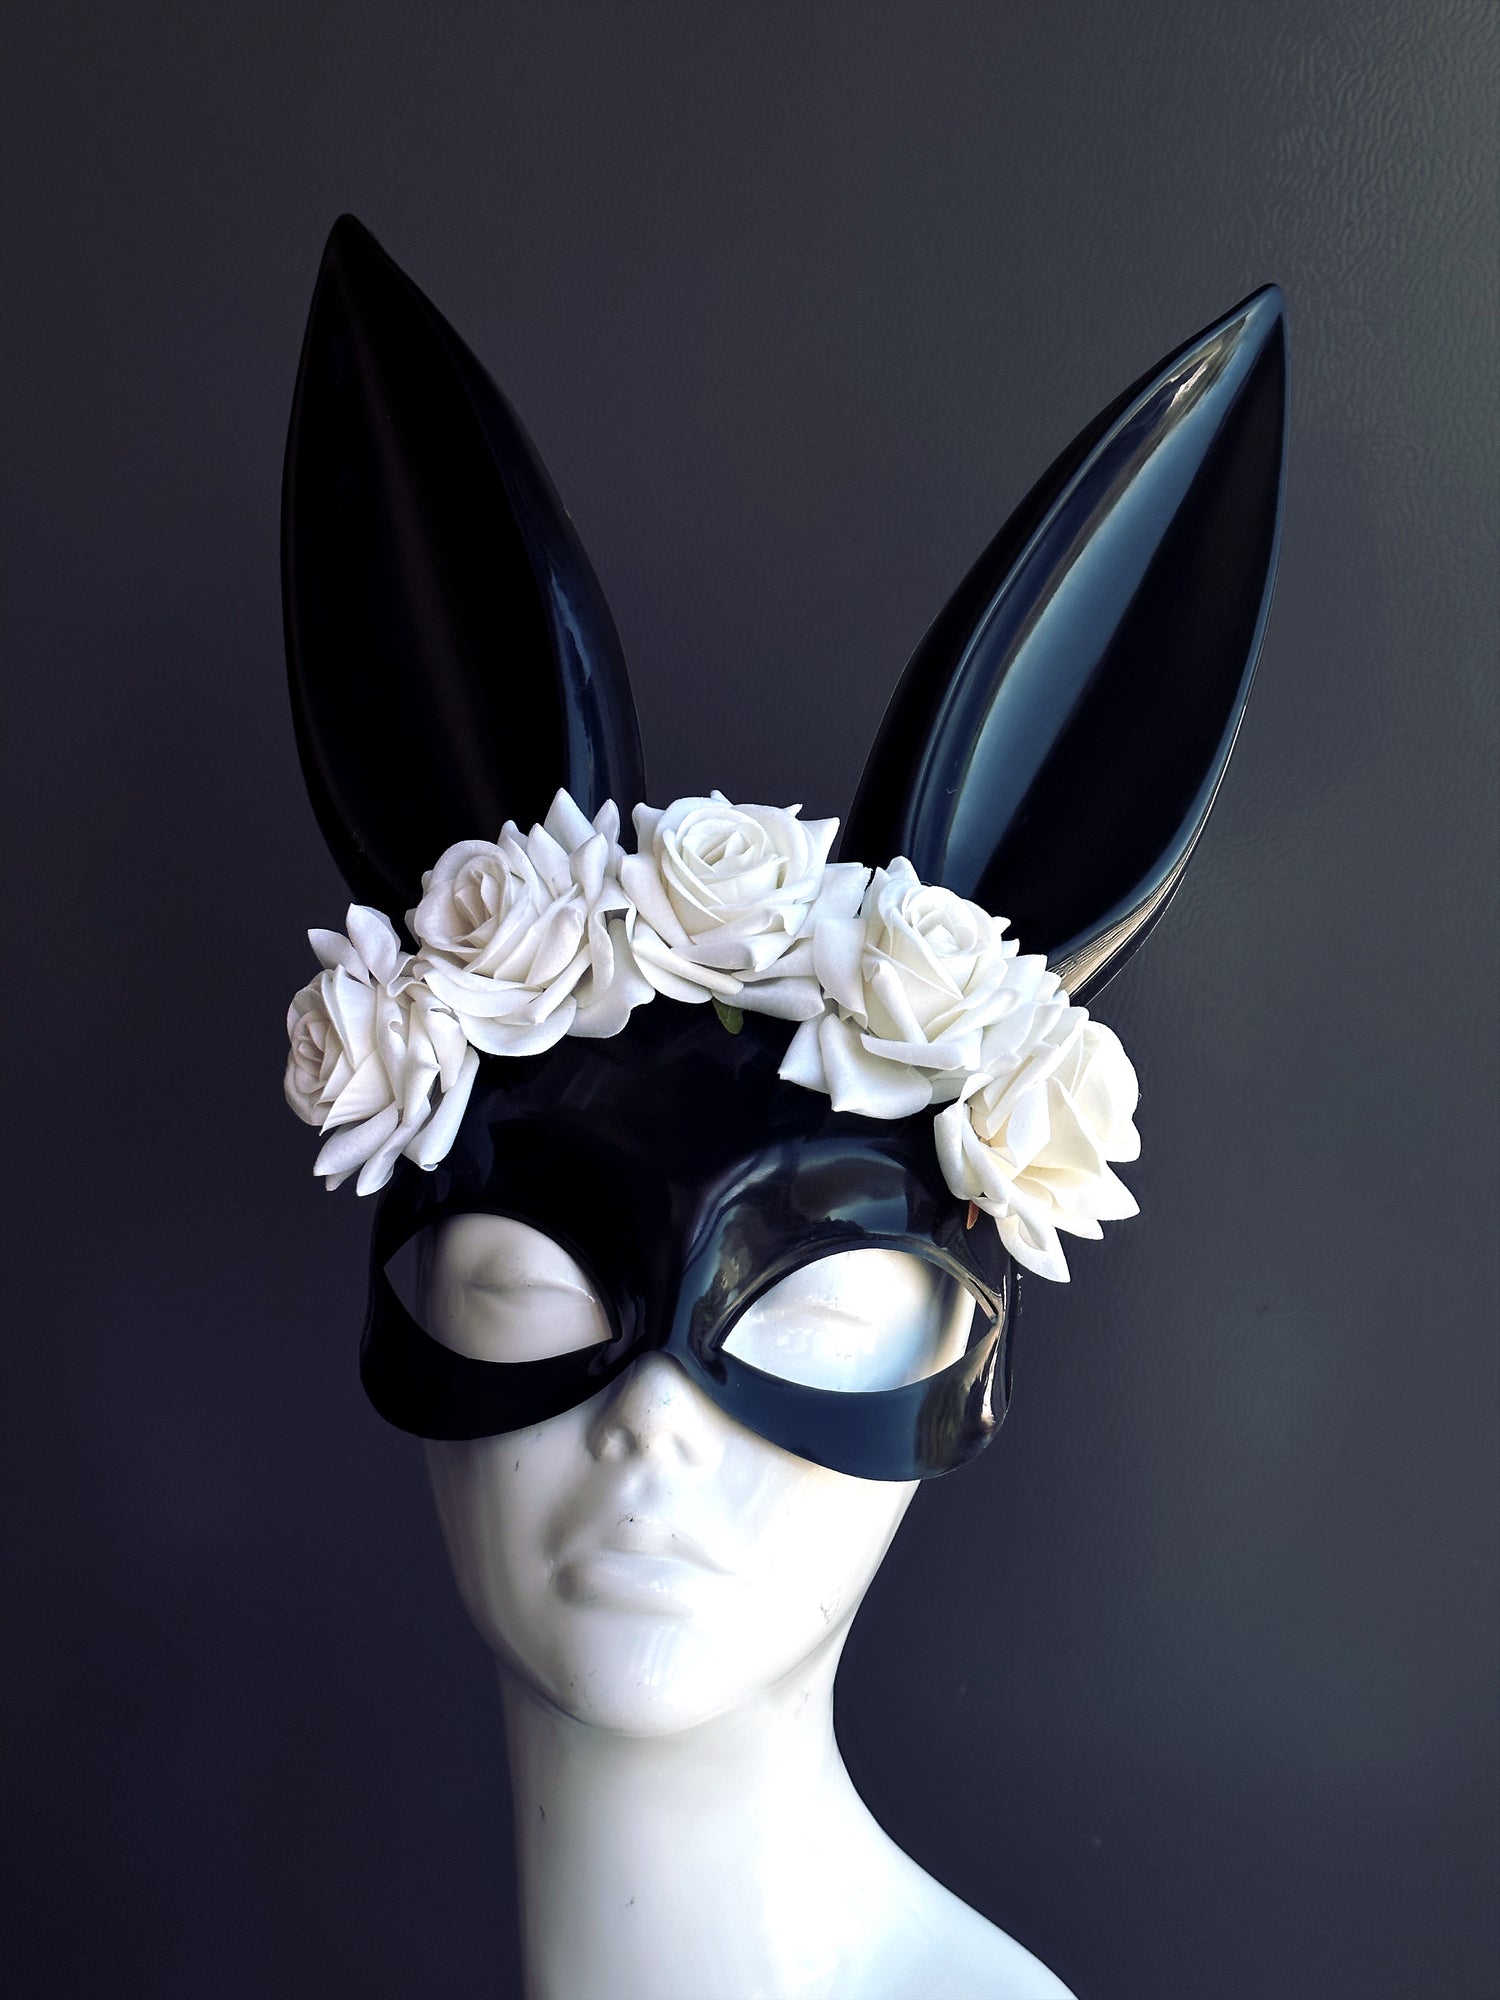 Bunny Mask / White Roses